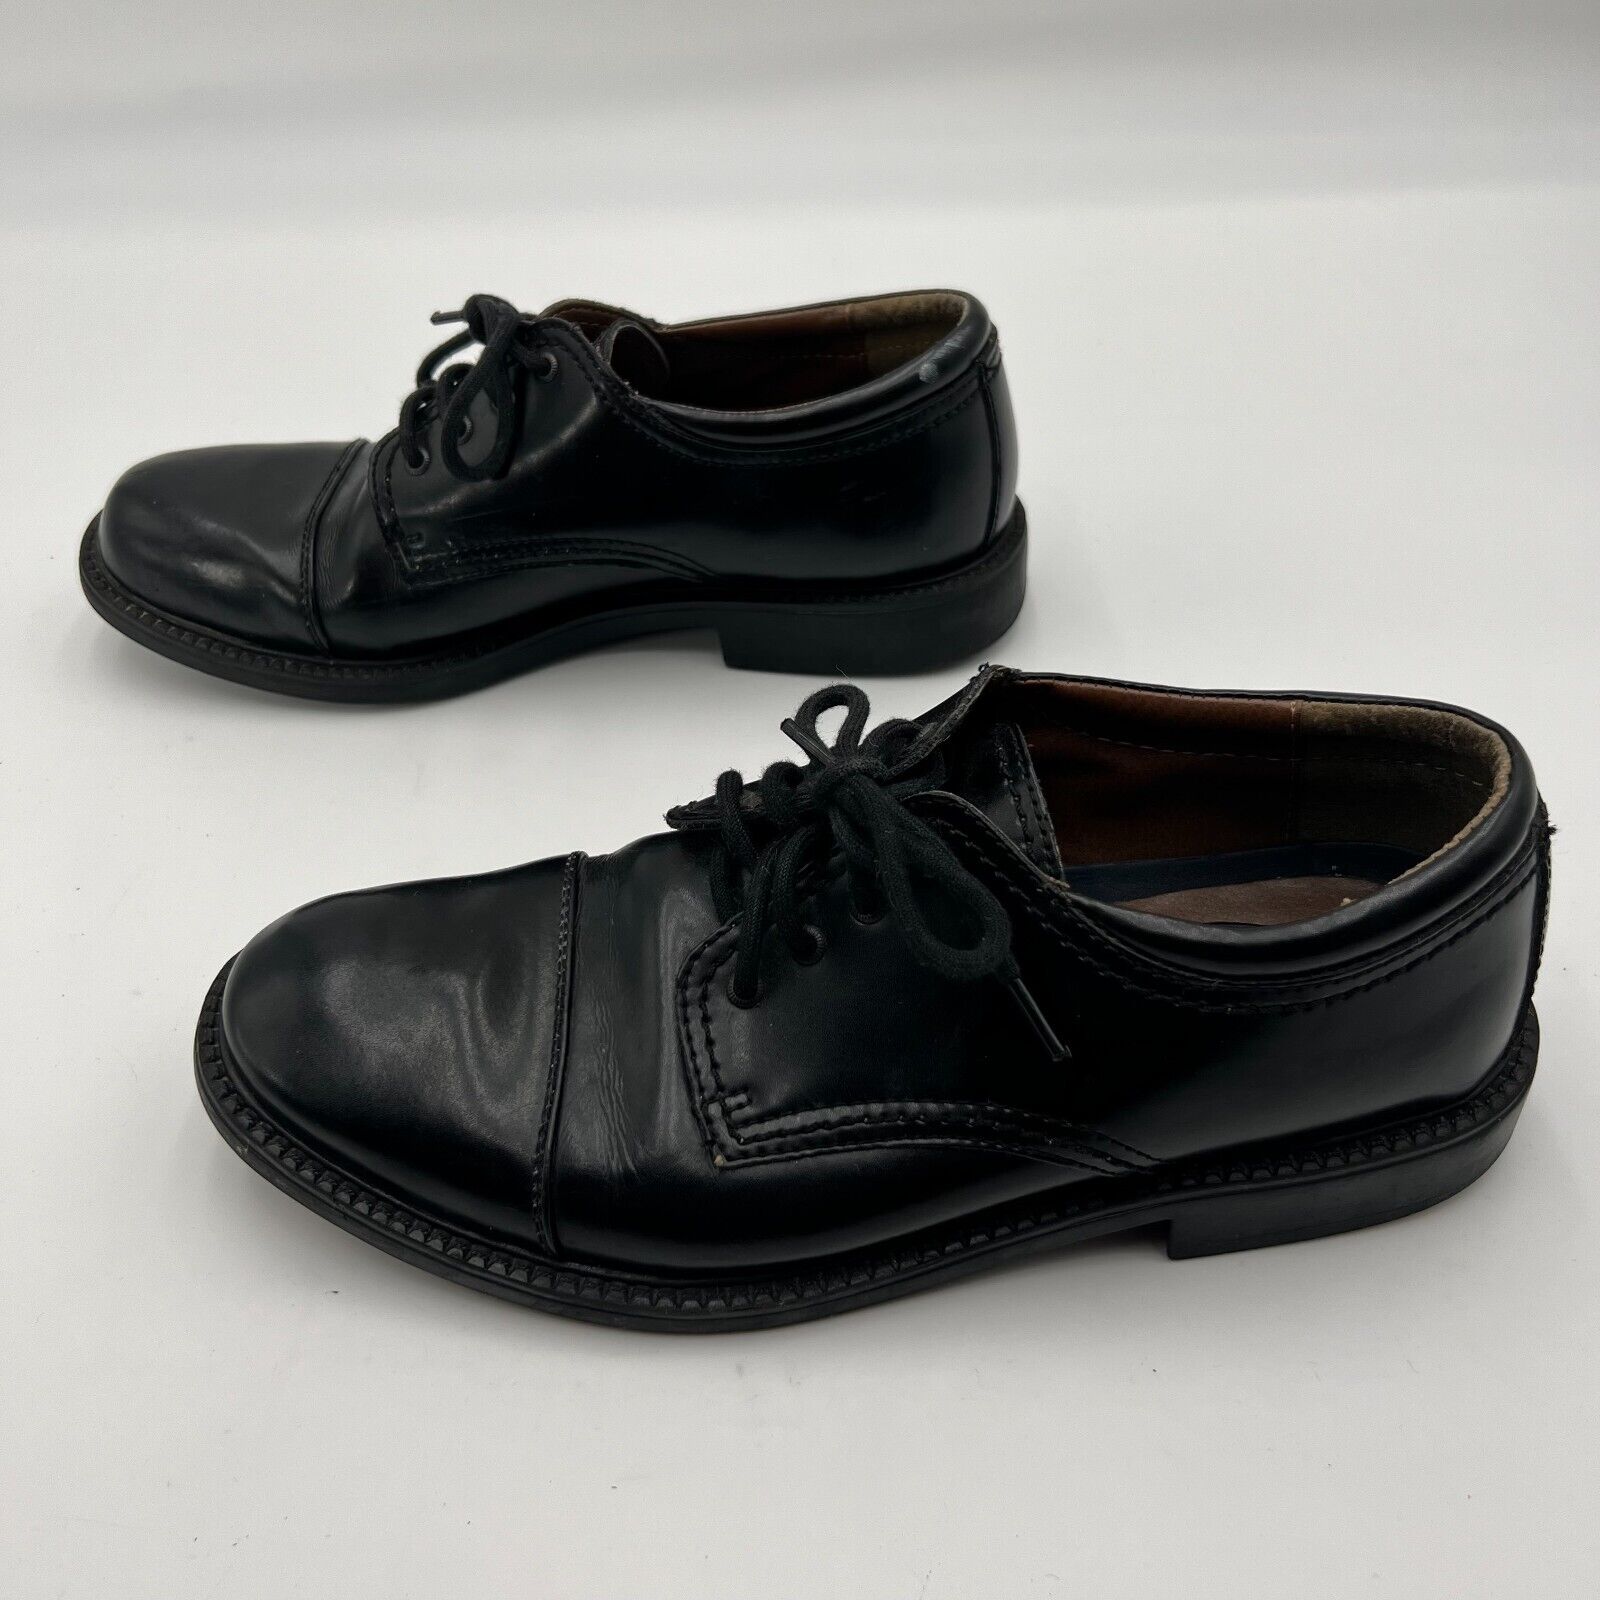 Men Dockers Gordon Cap Toe Oxford Genuine Leather Dress Shoes Black